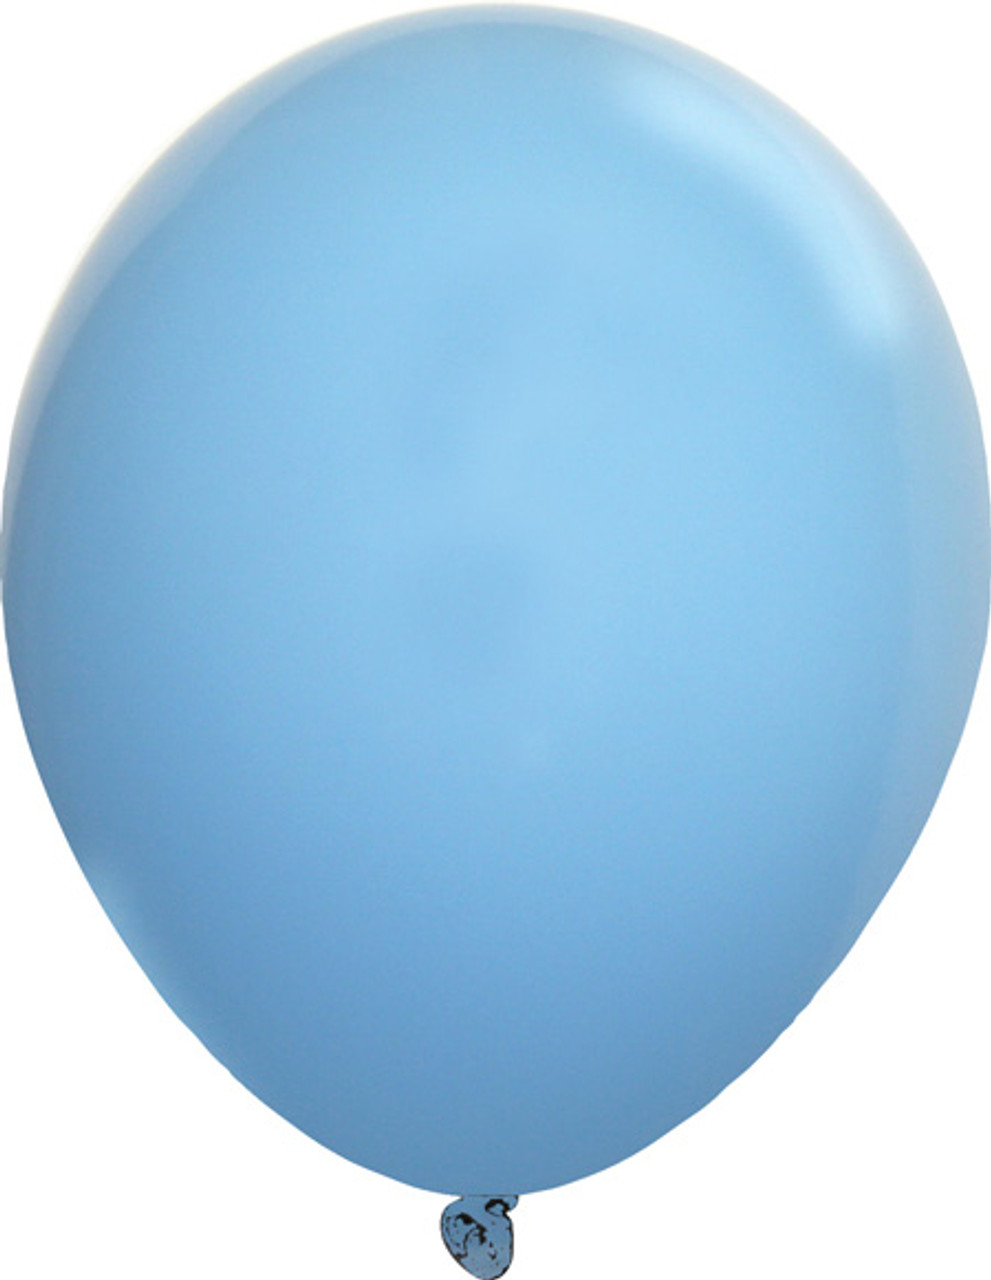 Custom Printed Standard Latex Balloons light blue